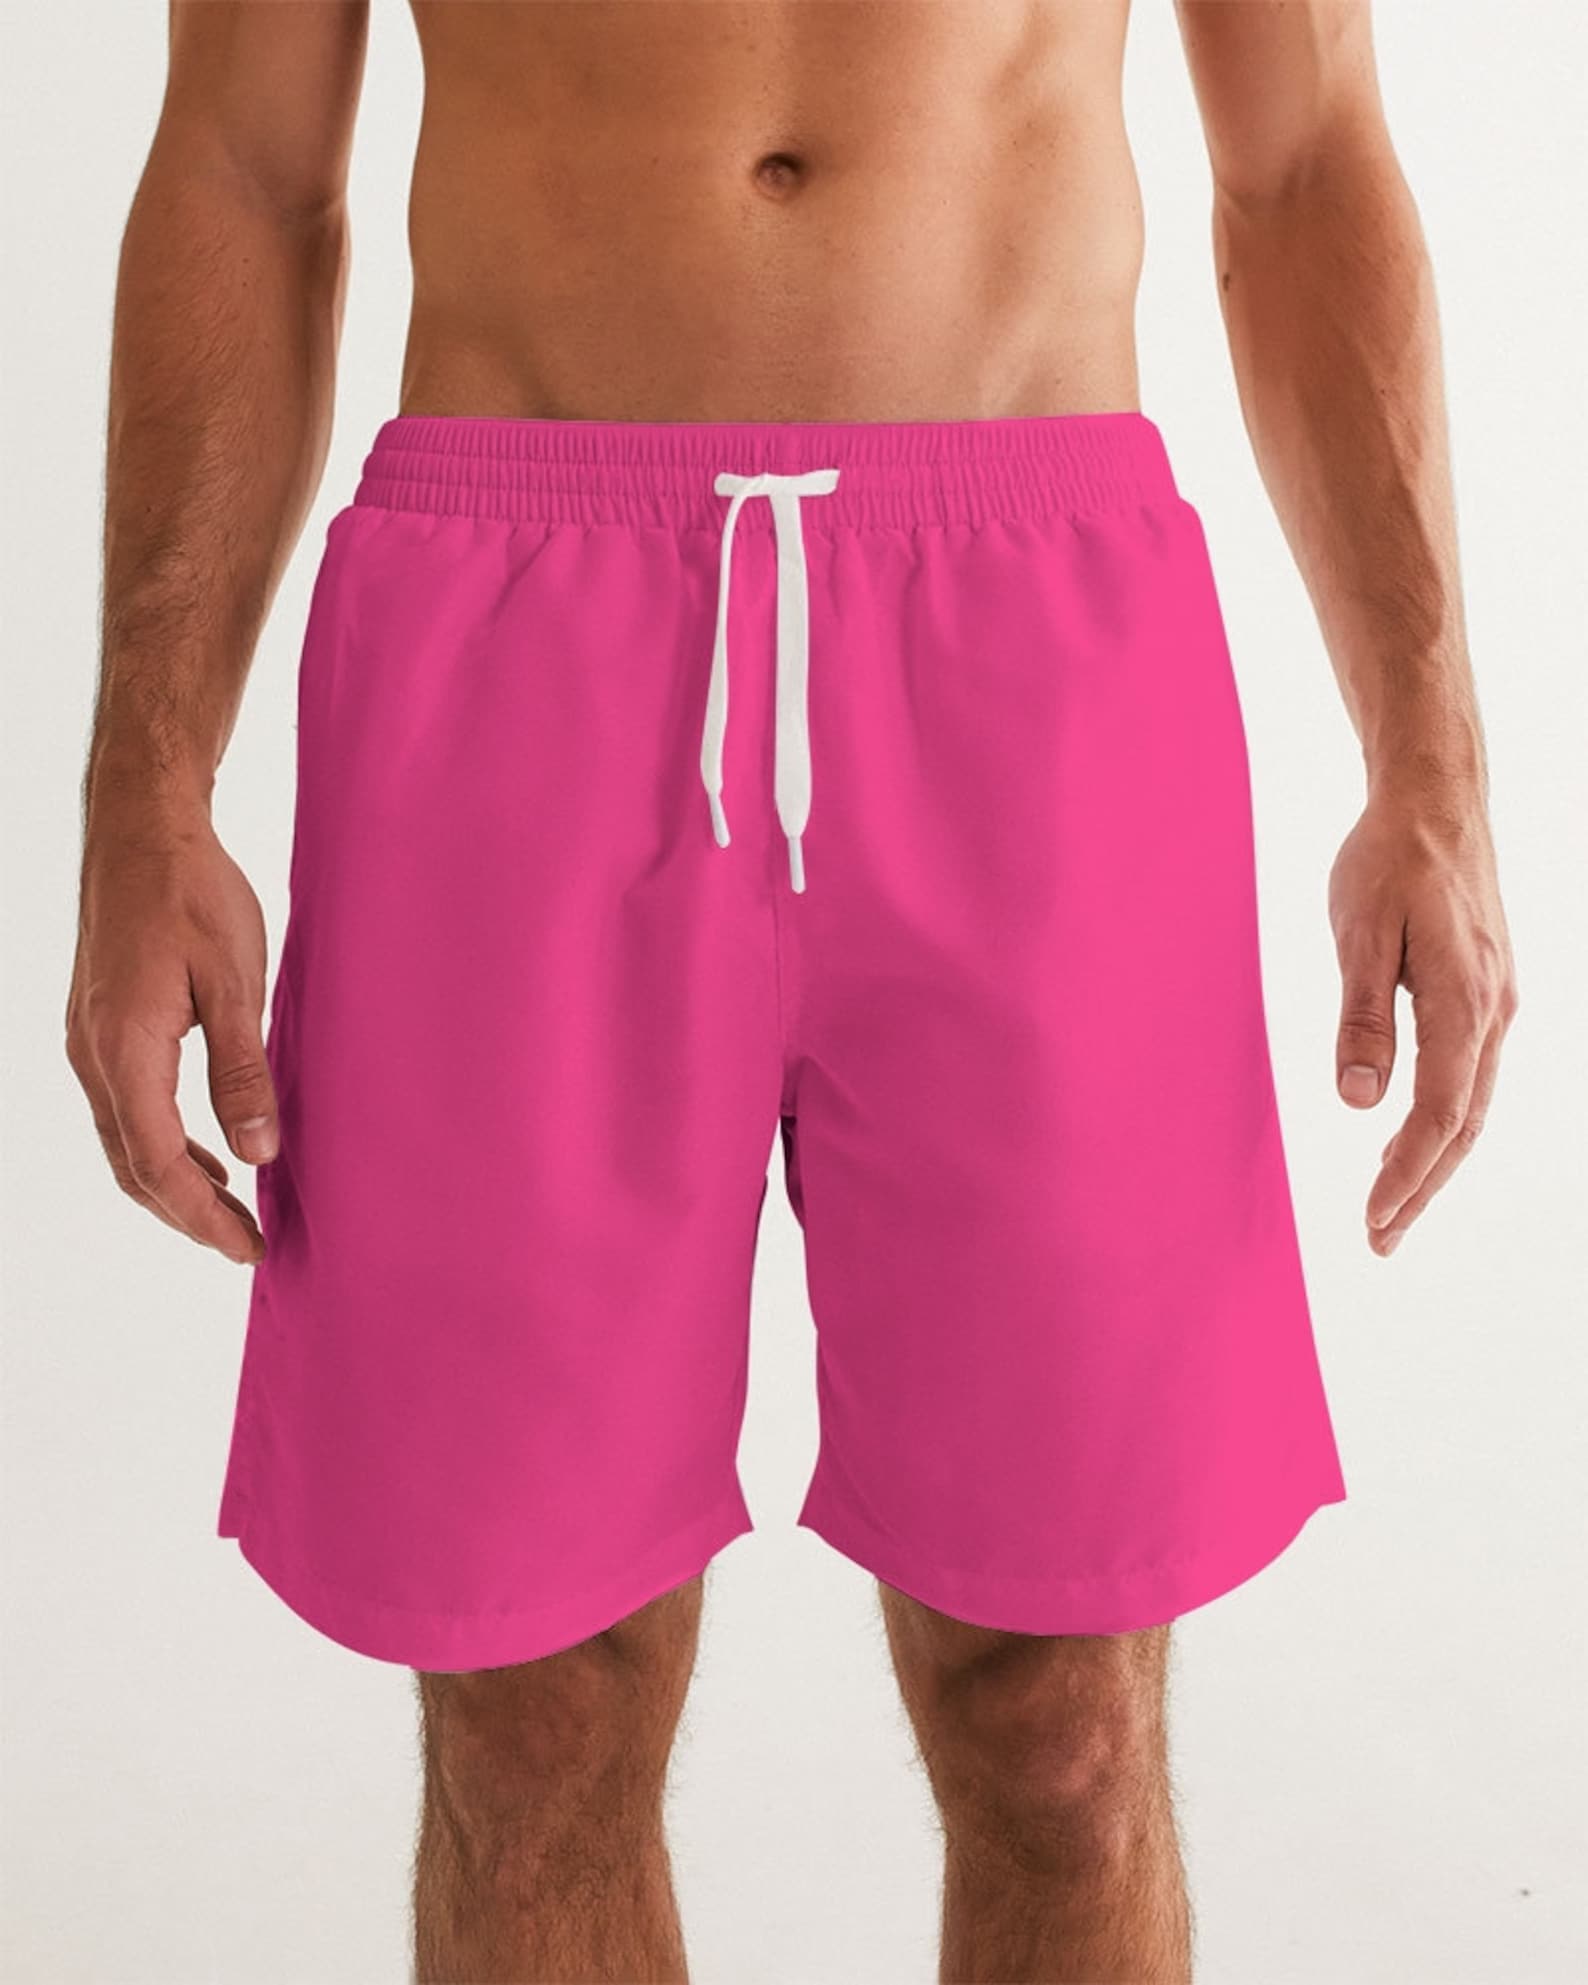 Matching Swimwear Sets for Couples in Custom Colors Bikini One | Etsy